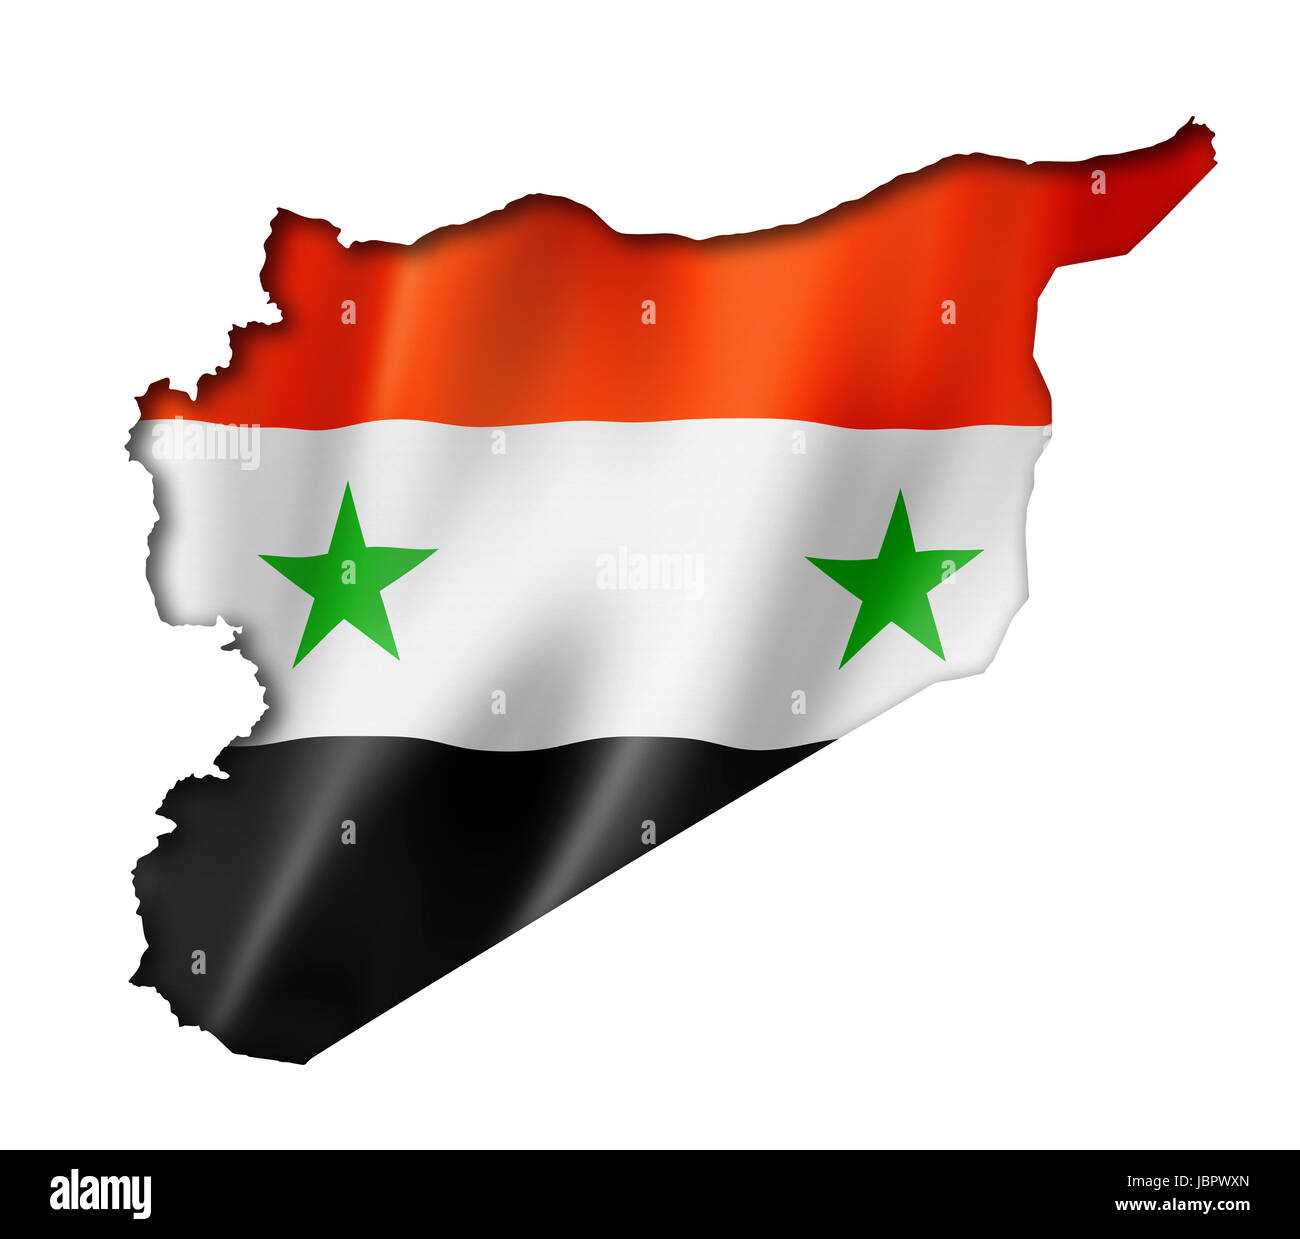 https://c8.alamy.com/comp/JBPWXN/syria-flag-map-three-dimensional-render-isolated-on-white-JBPWXN.jpg